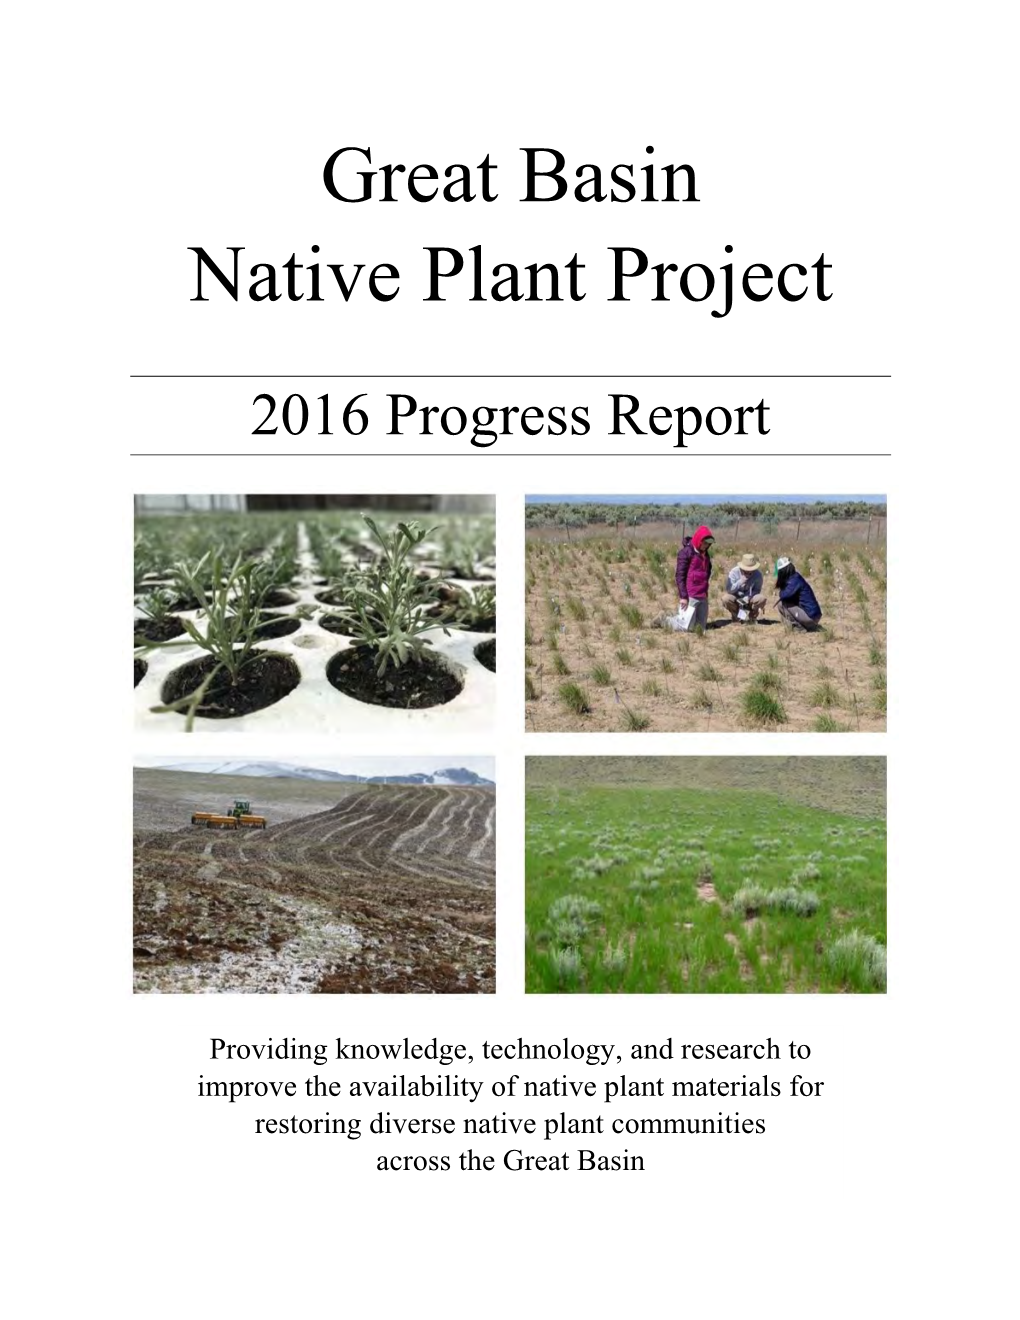 Great Basin Native Plant Project 2016 Progress Report